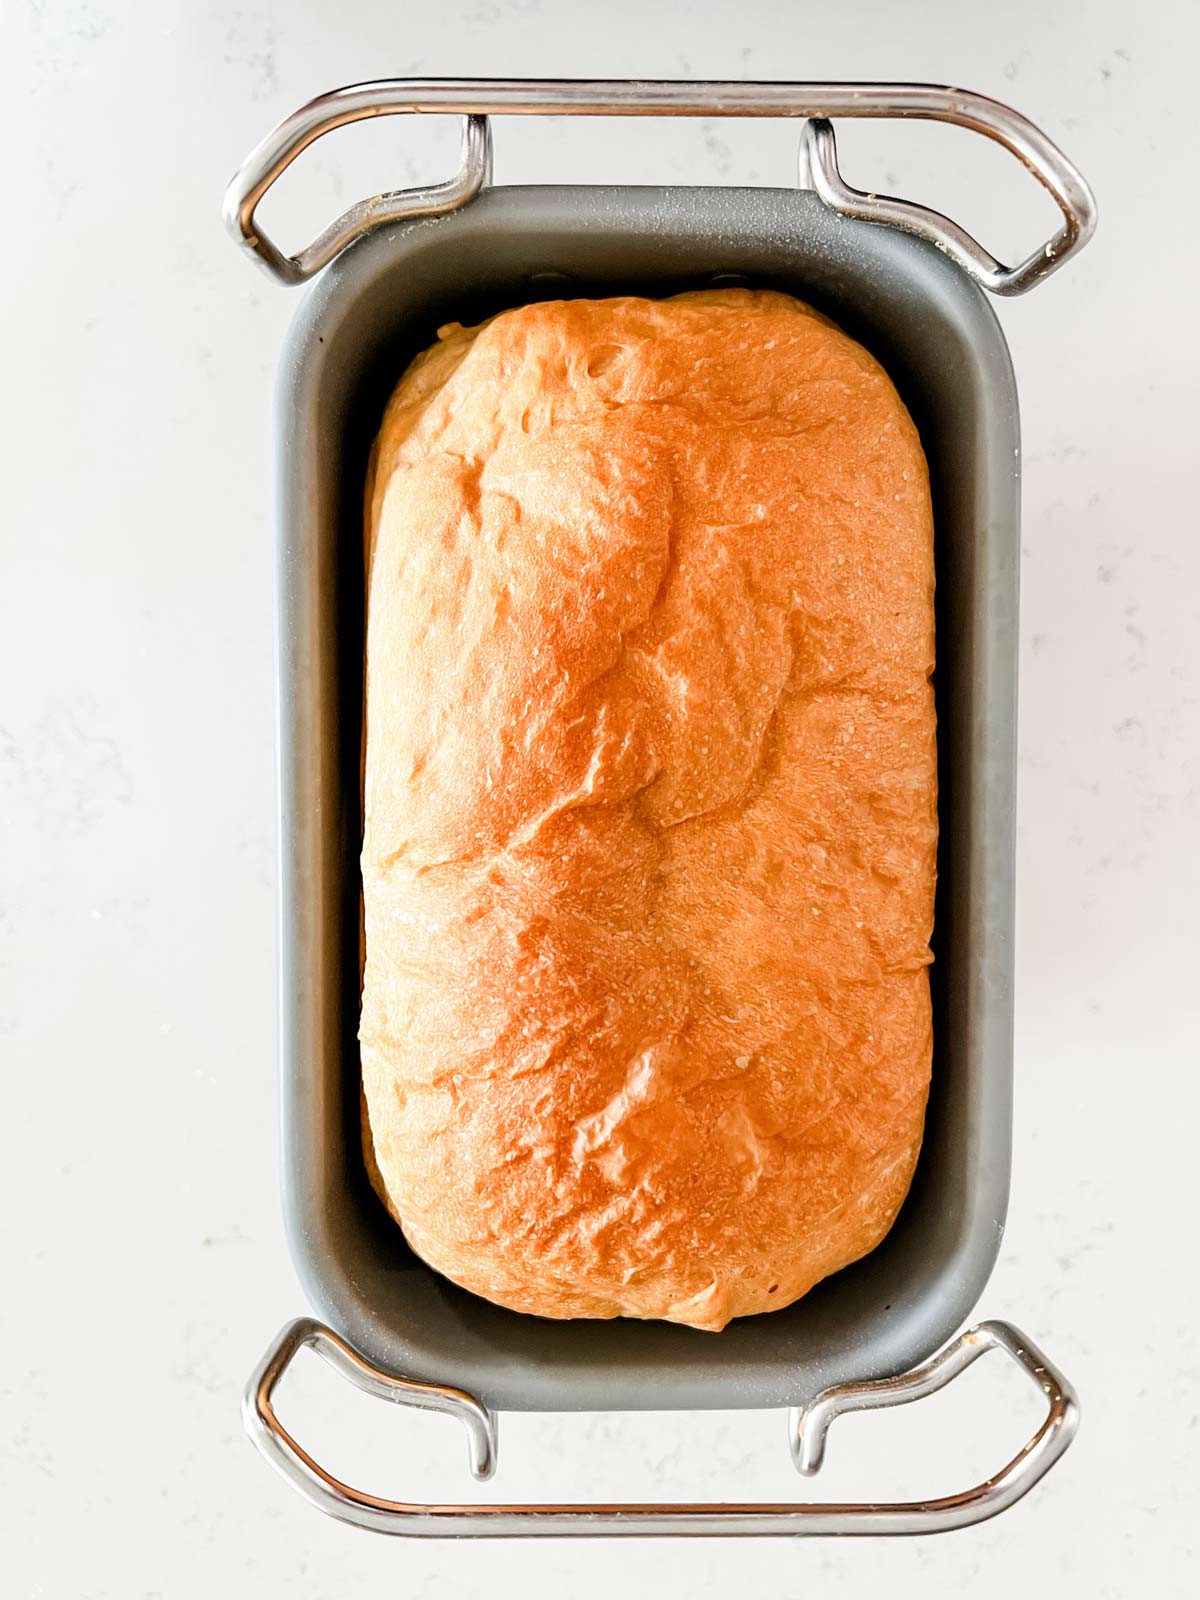 Baked bread in a bread machine pan.